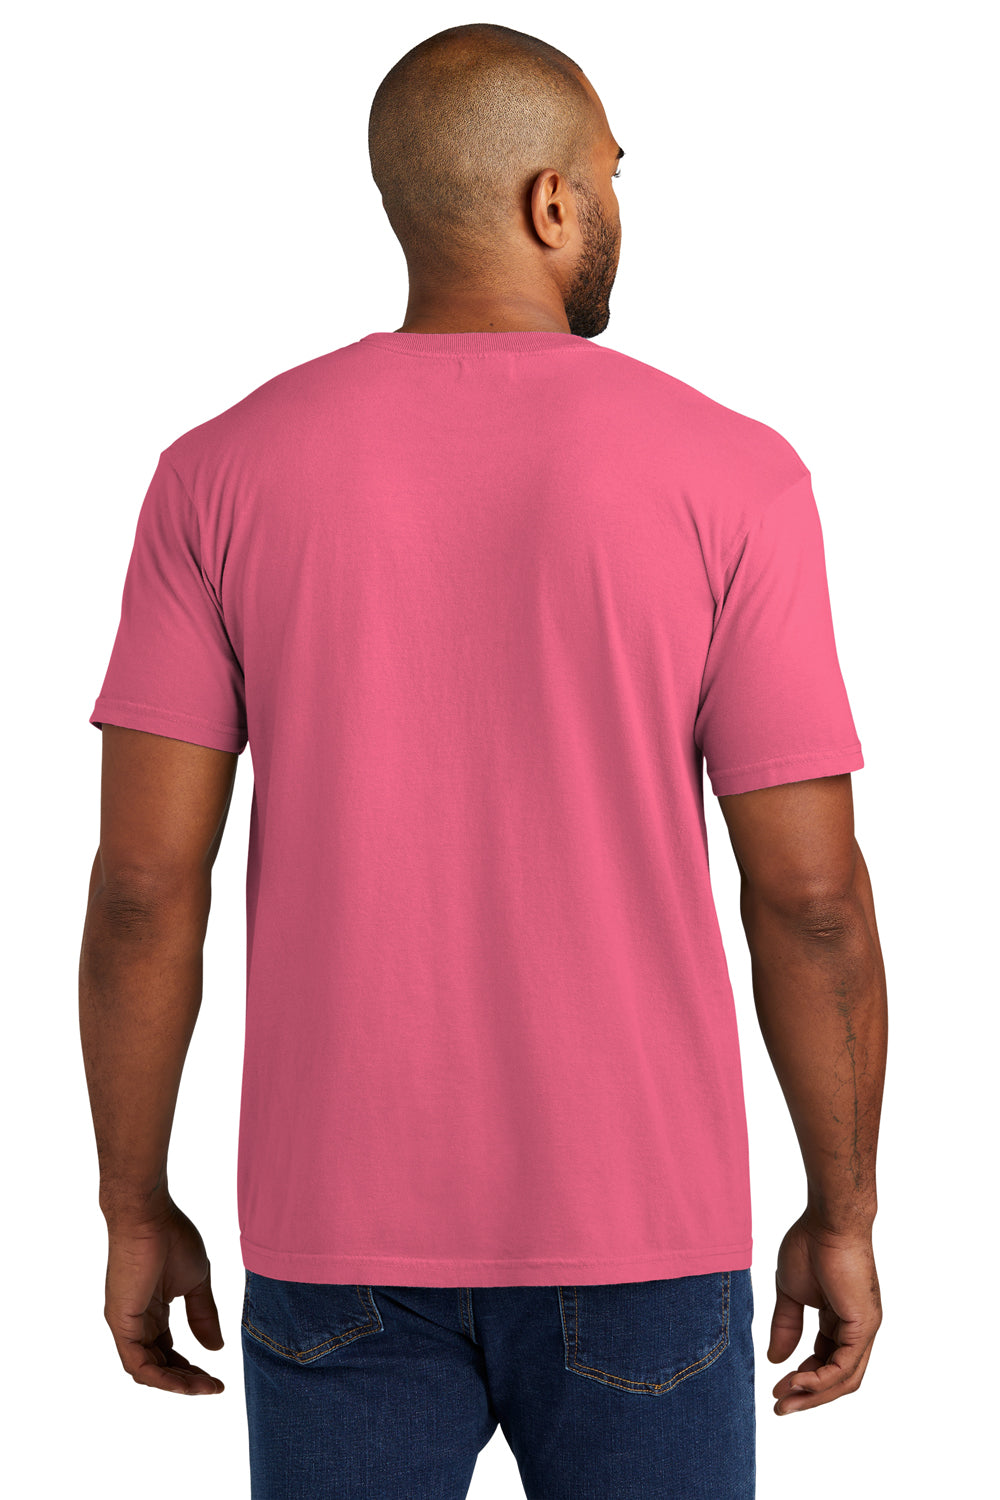 Comfort Colors Mens Short Sleeve Crewneck T-Shirt w/ Pocket Crunchberry Pink Back